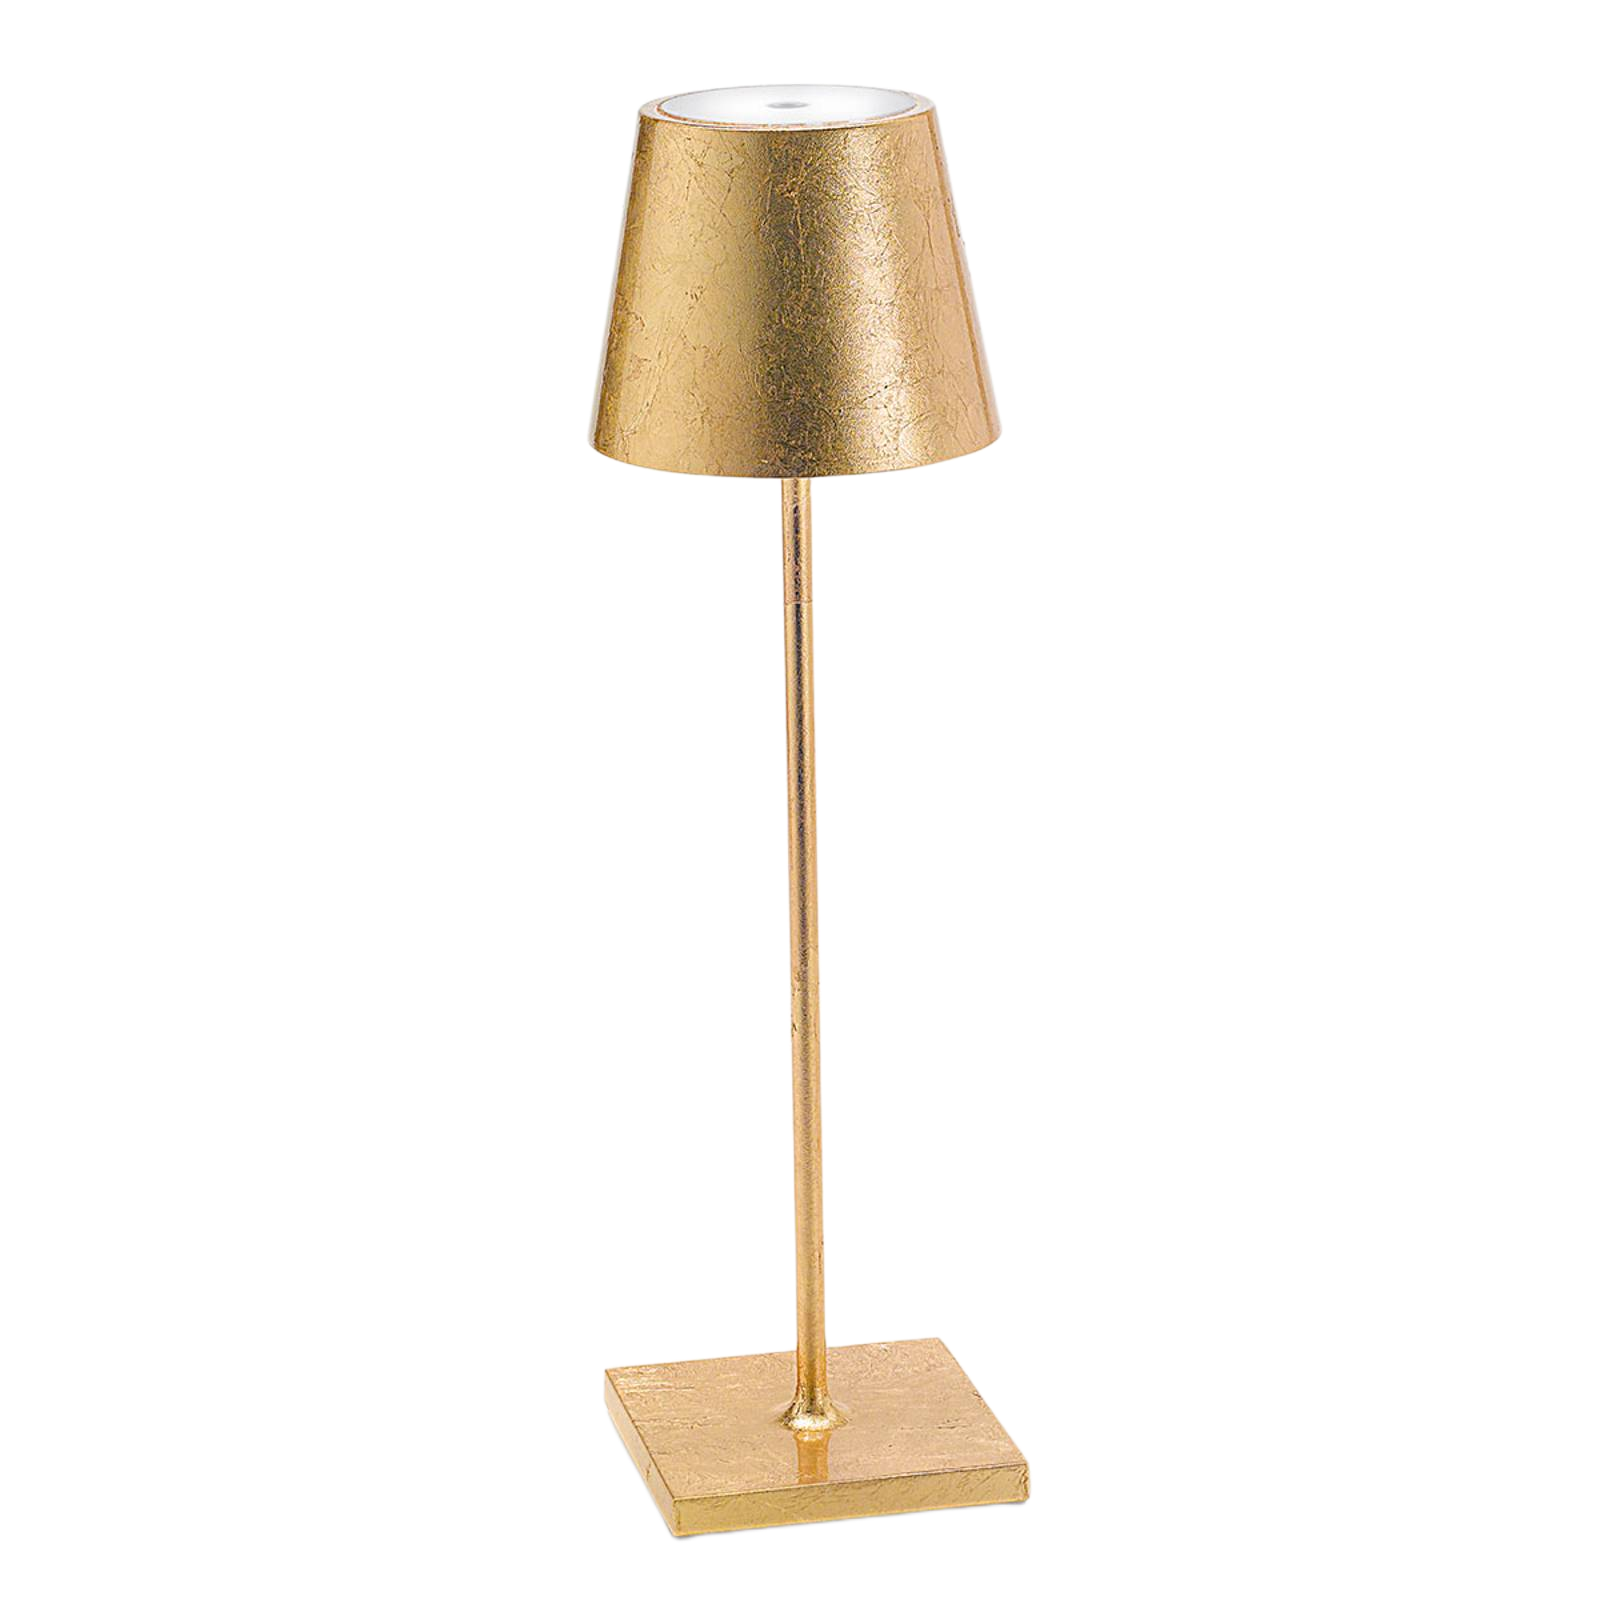 KONRAD INTERIOR SELECTION - LED Table Lamp Gold